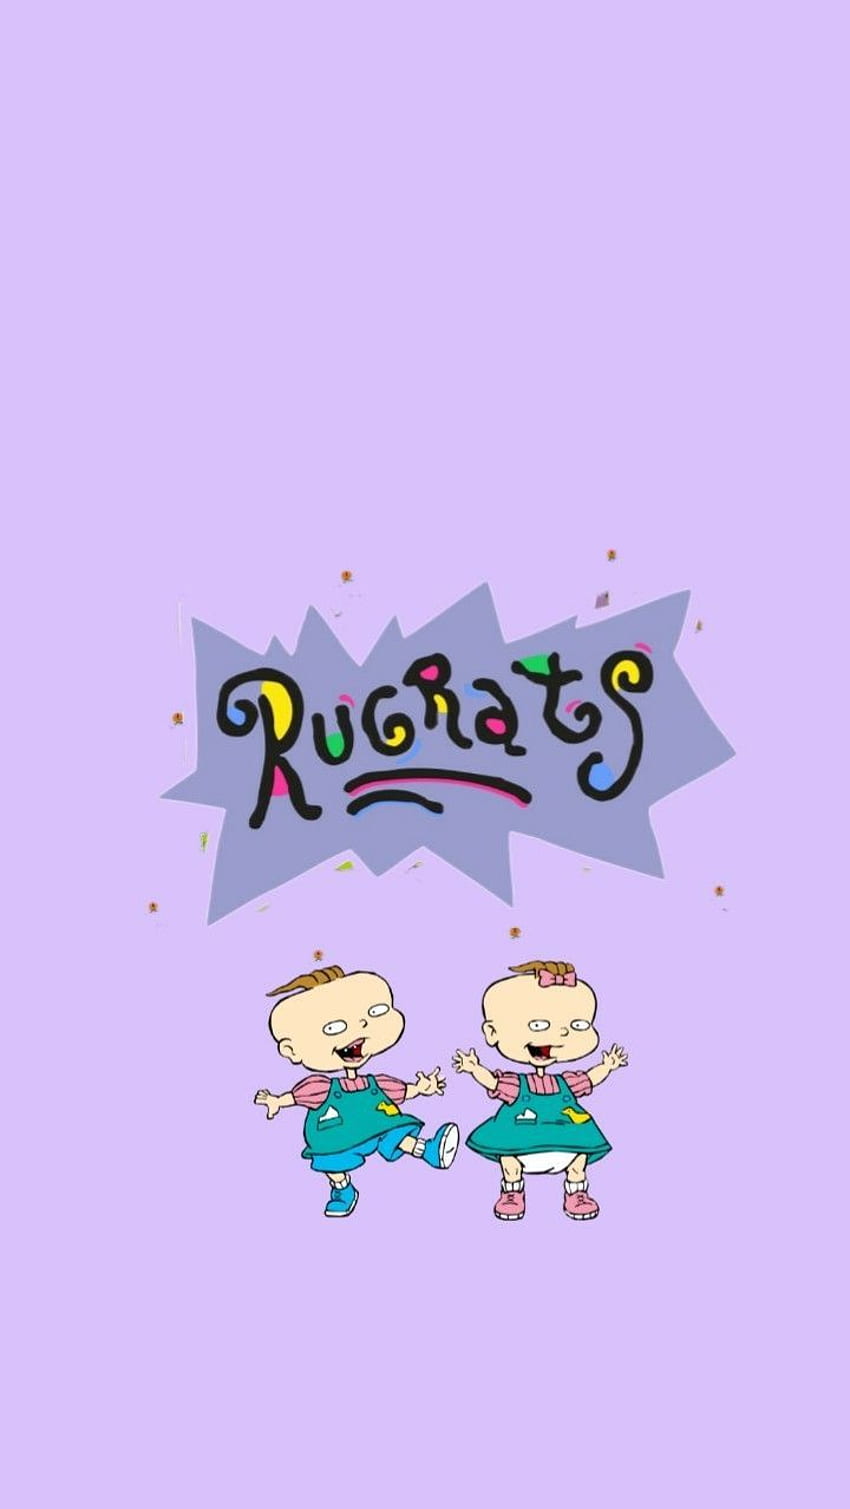 Rugrats in 2019. iPhone tumblr aesthetic, Cartoon HD phone wallpaper